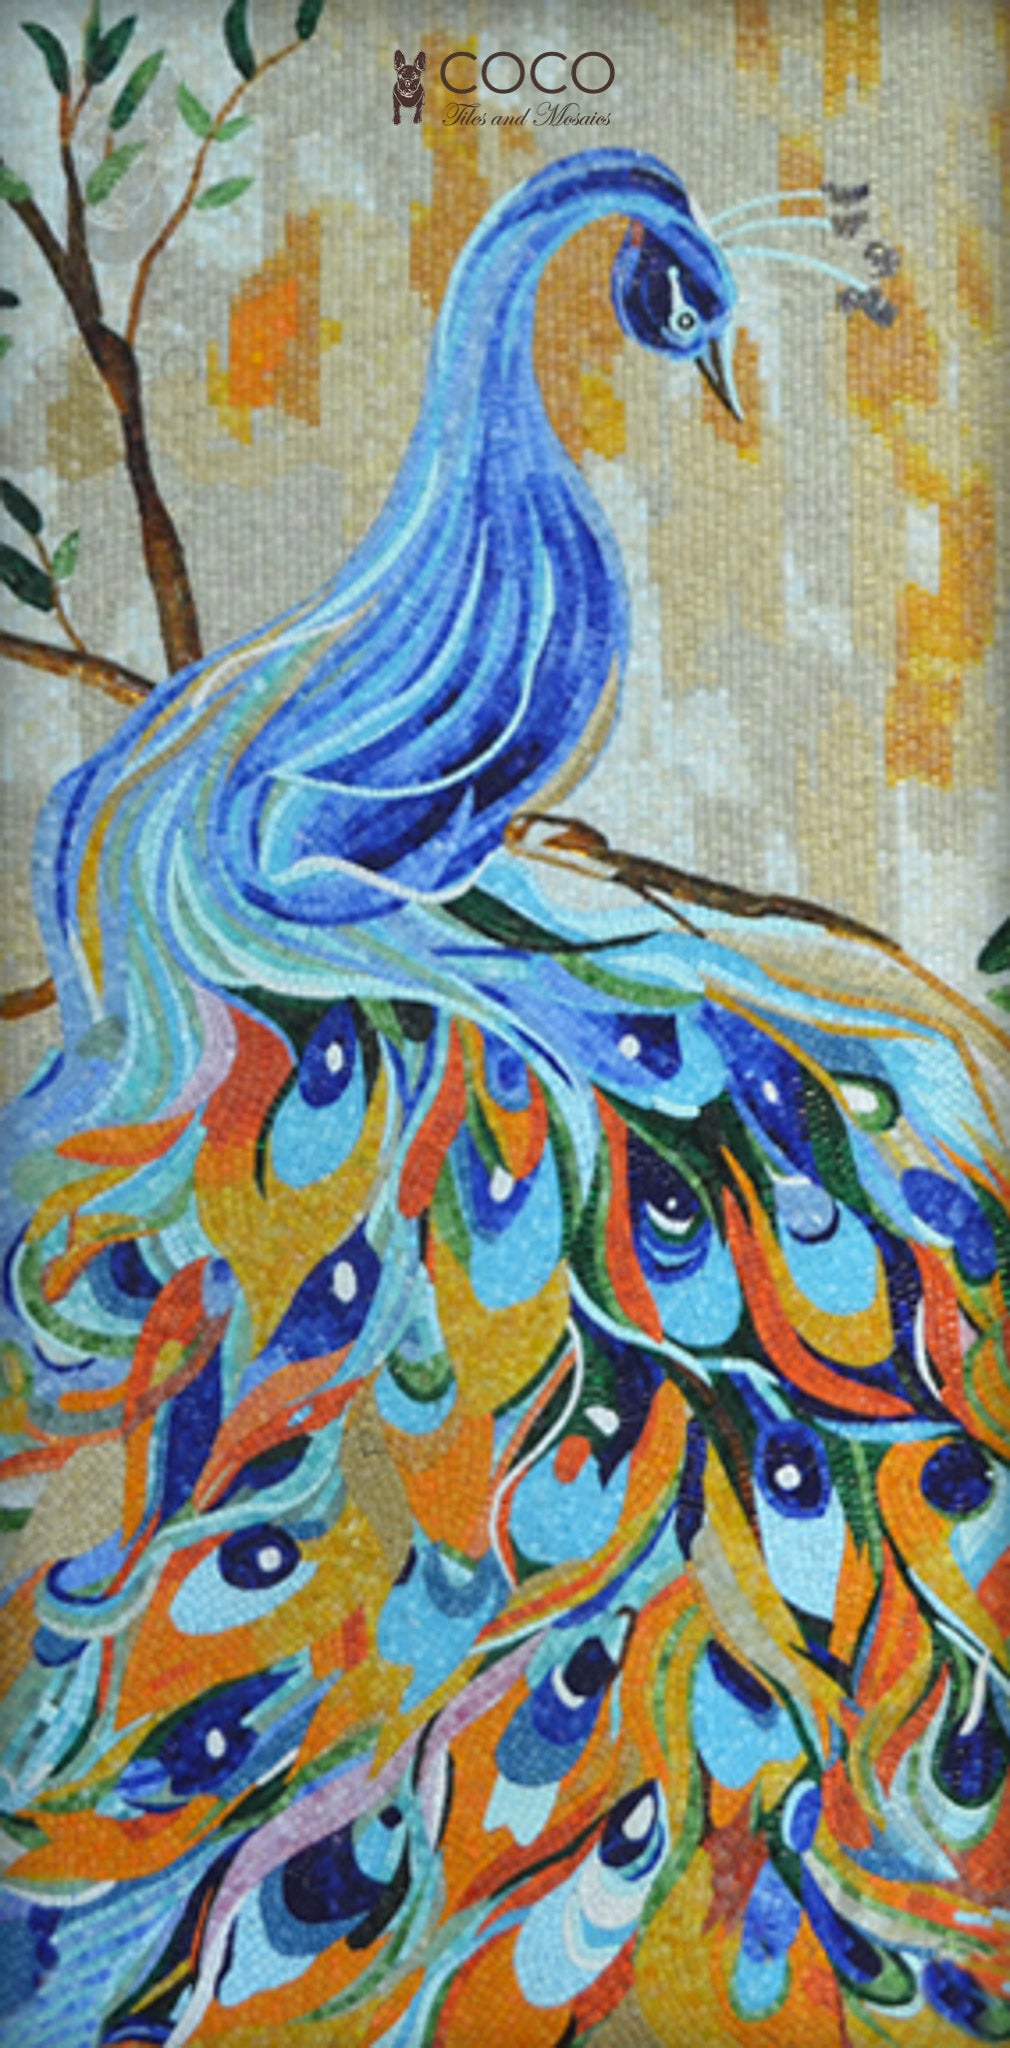 Artistic Mosaic - Peacock - Fantasy